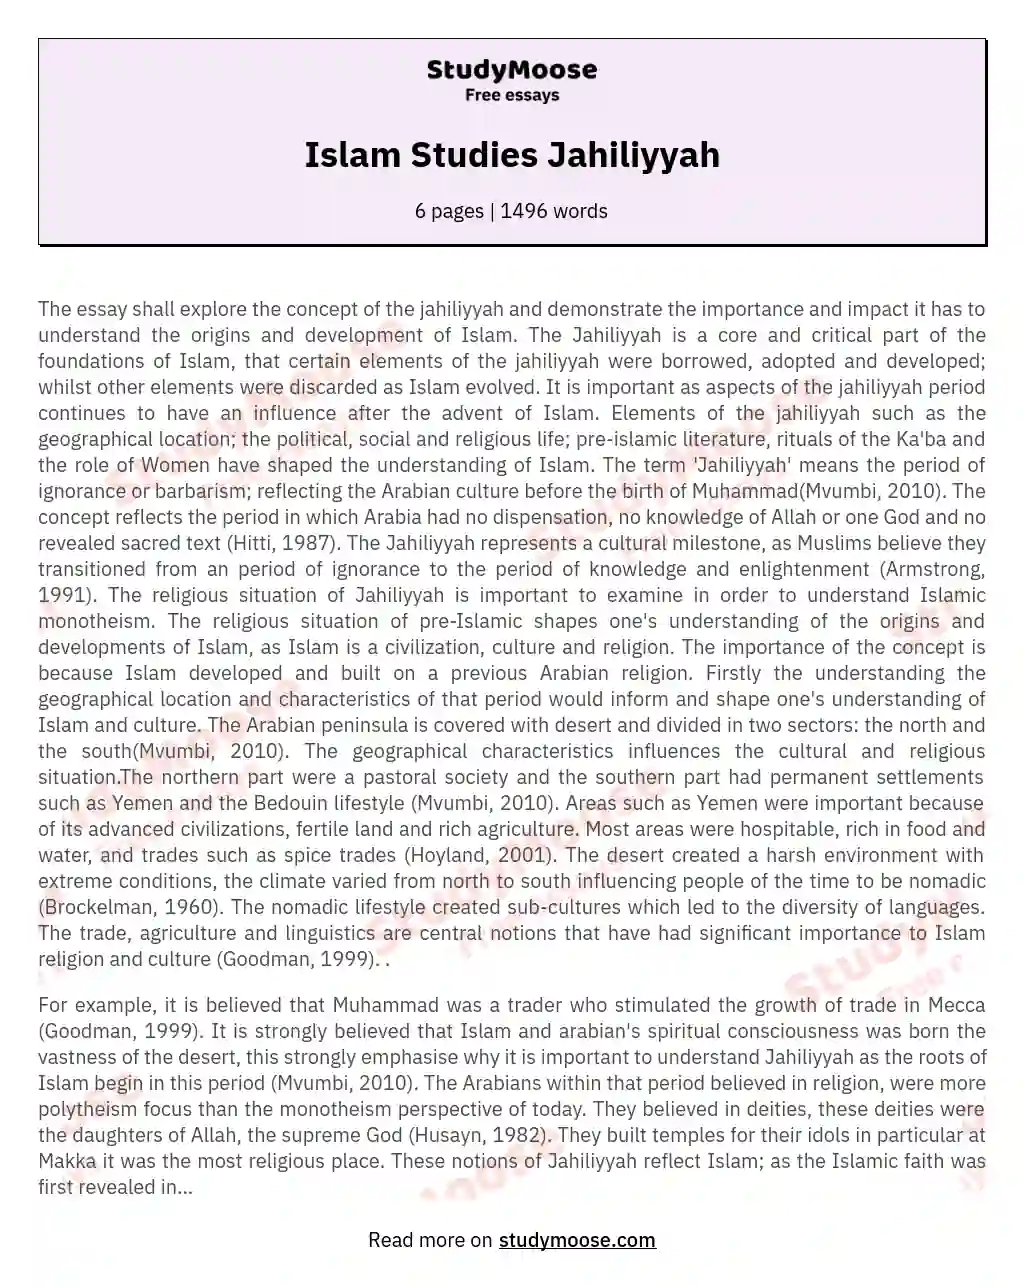 Islam Studies Jahiliyyah essay